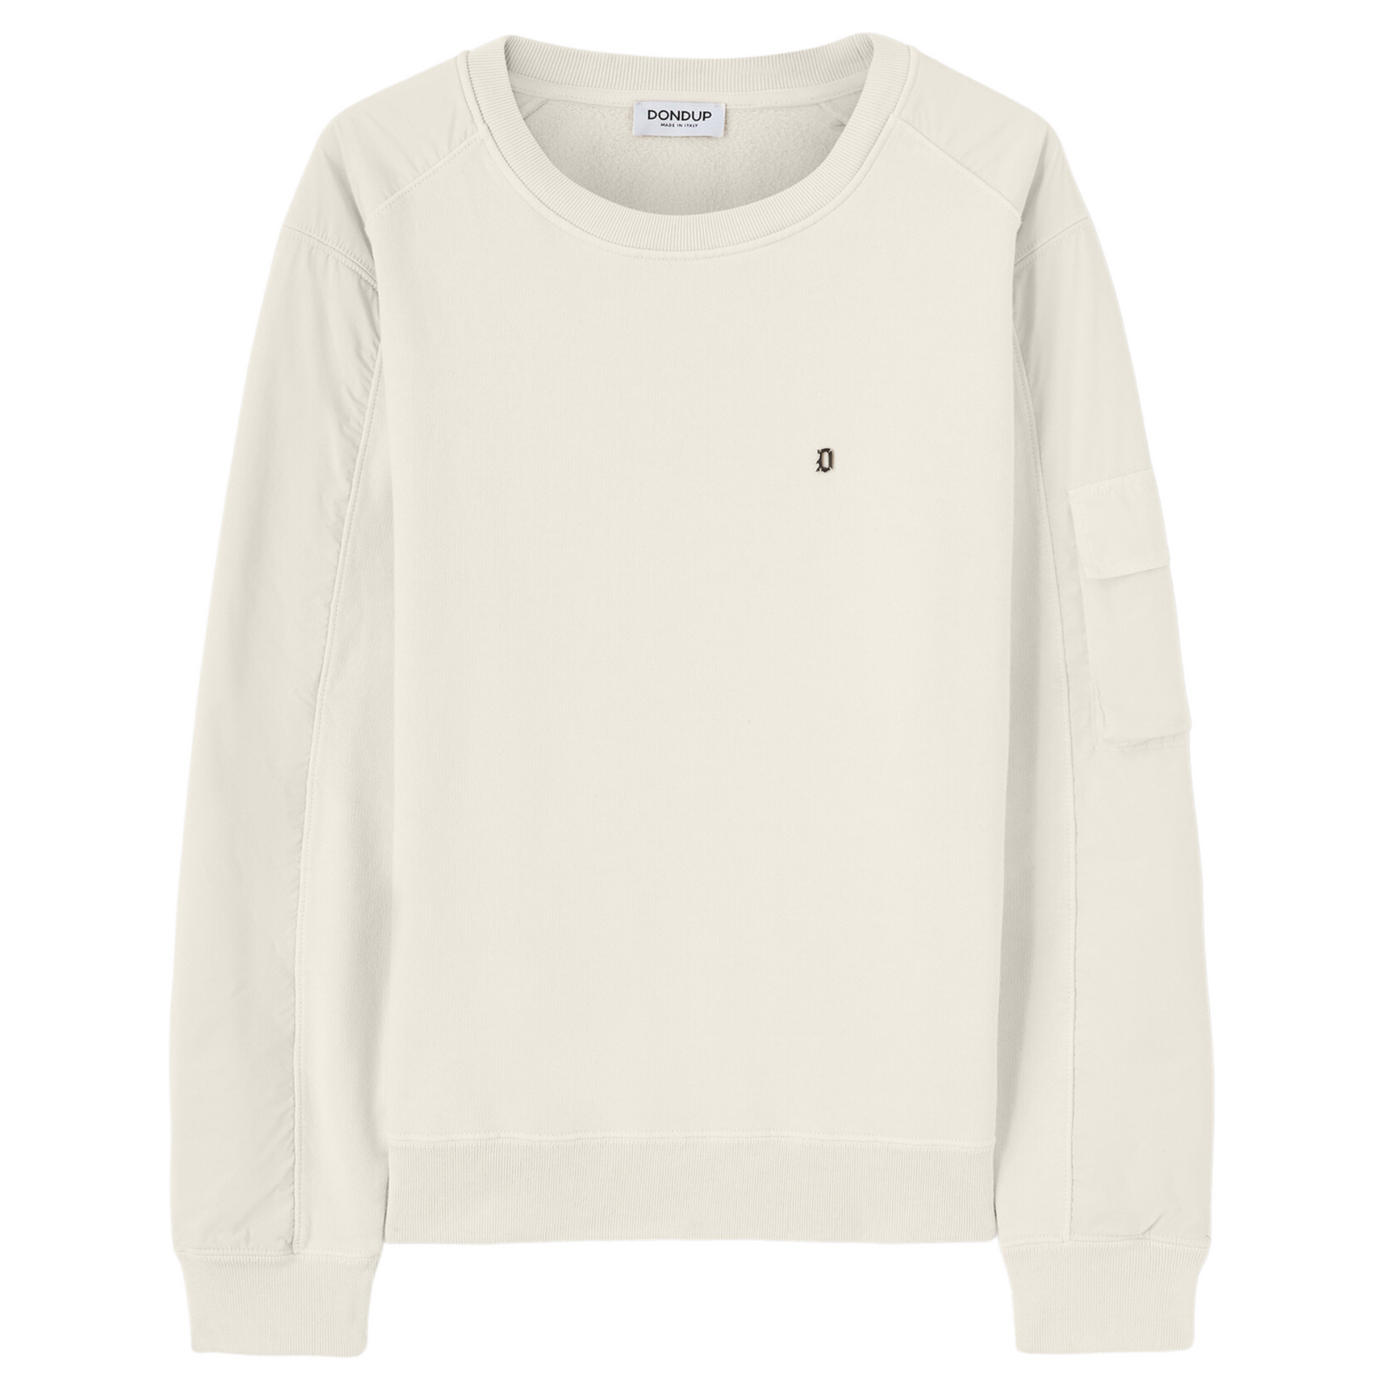 Dondup Sweatshirt Off White